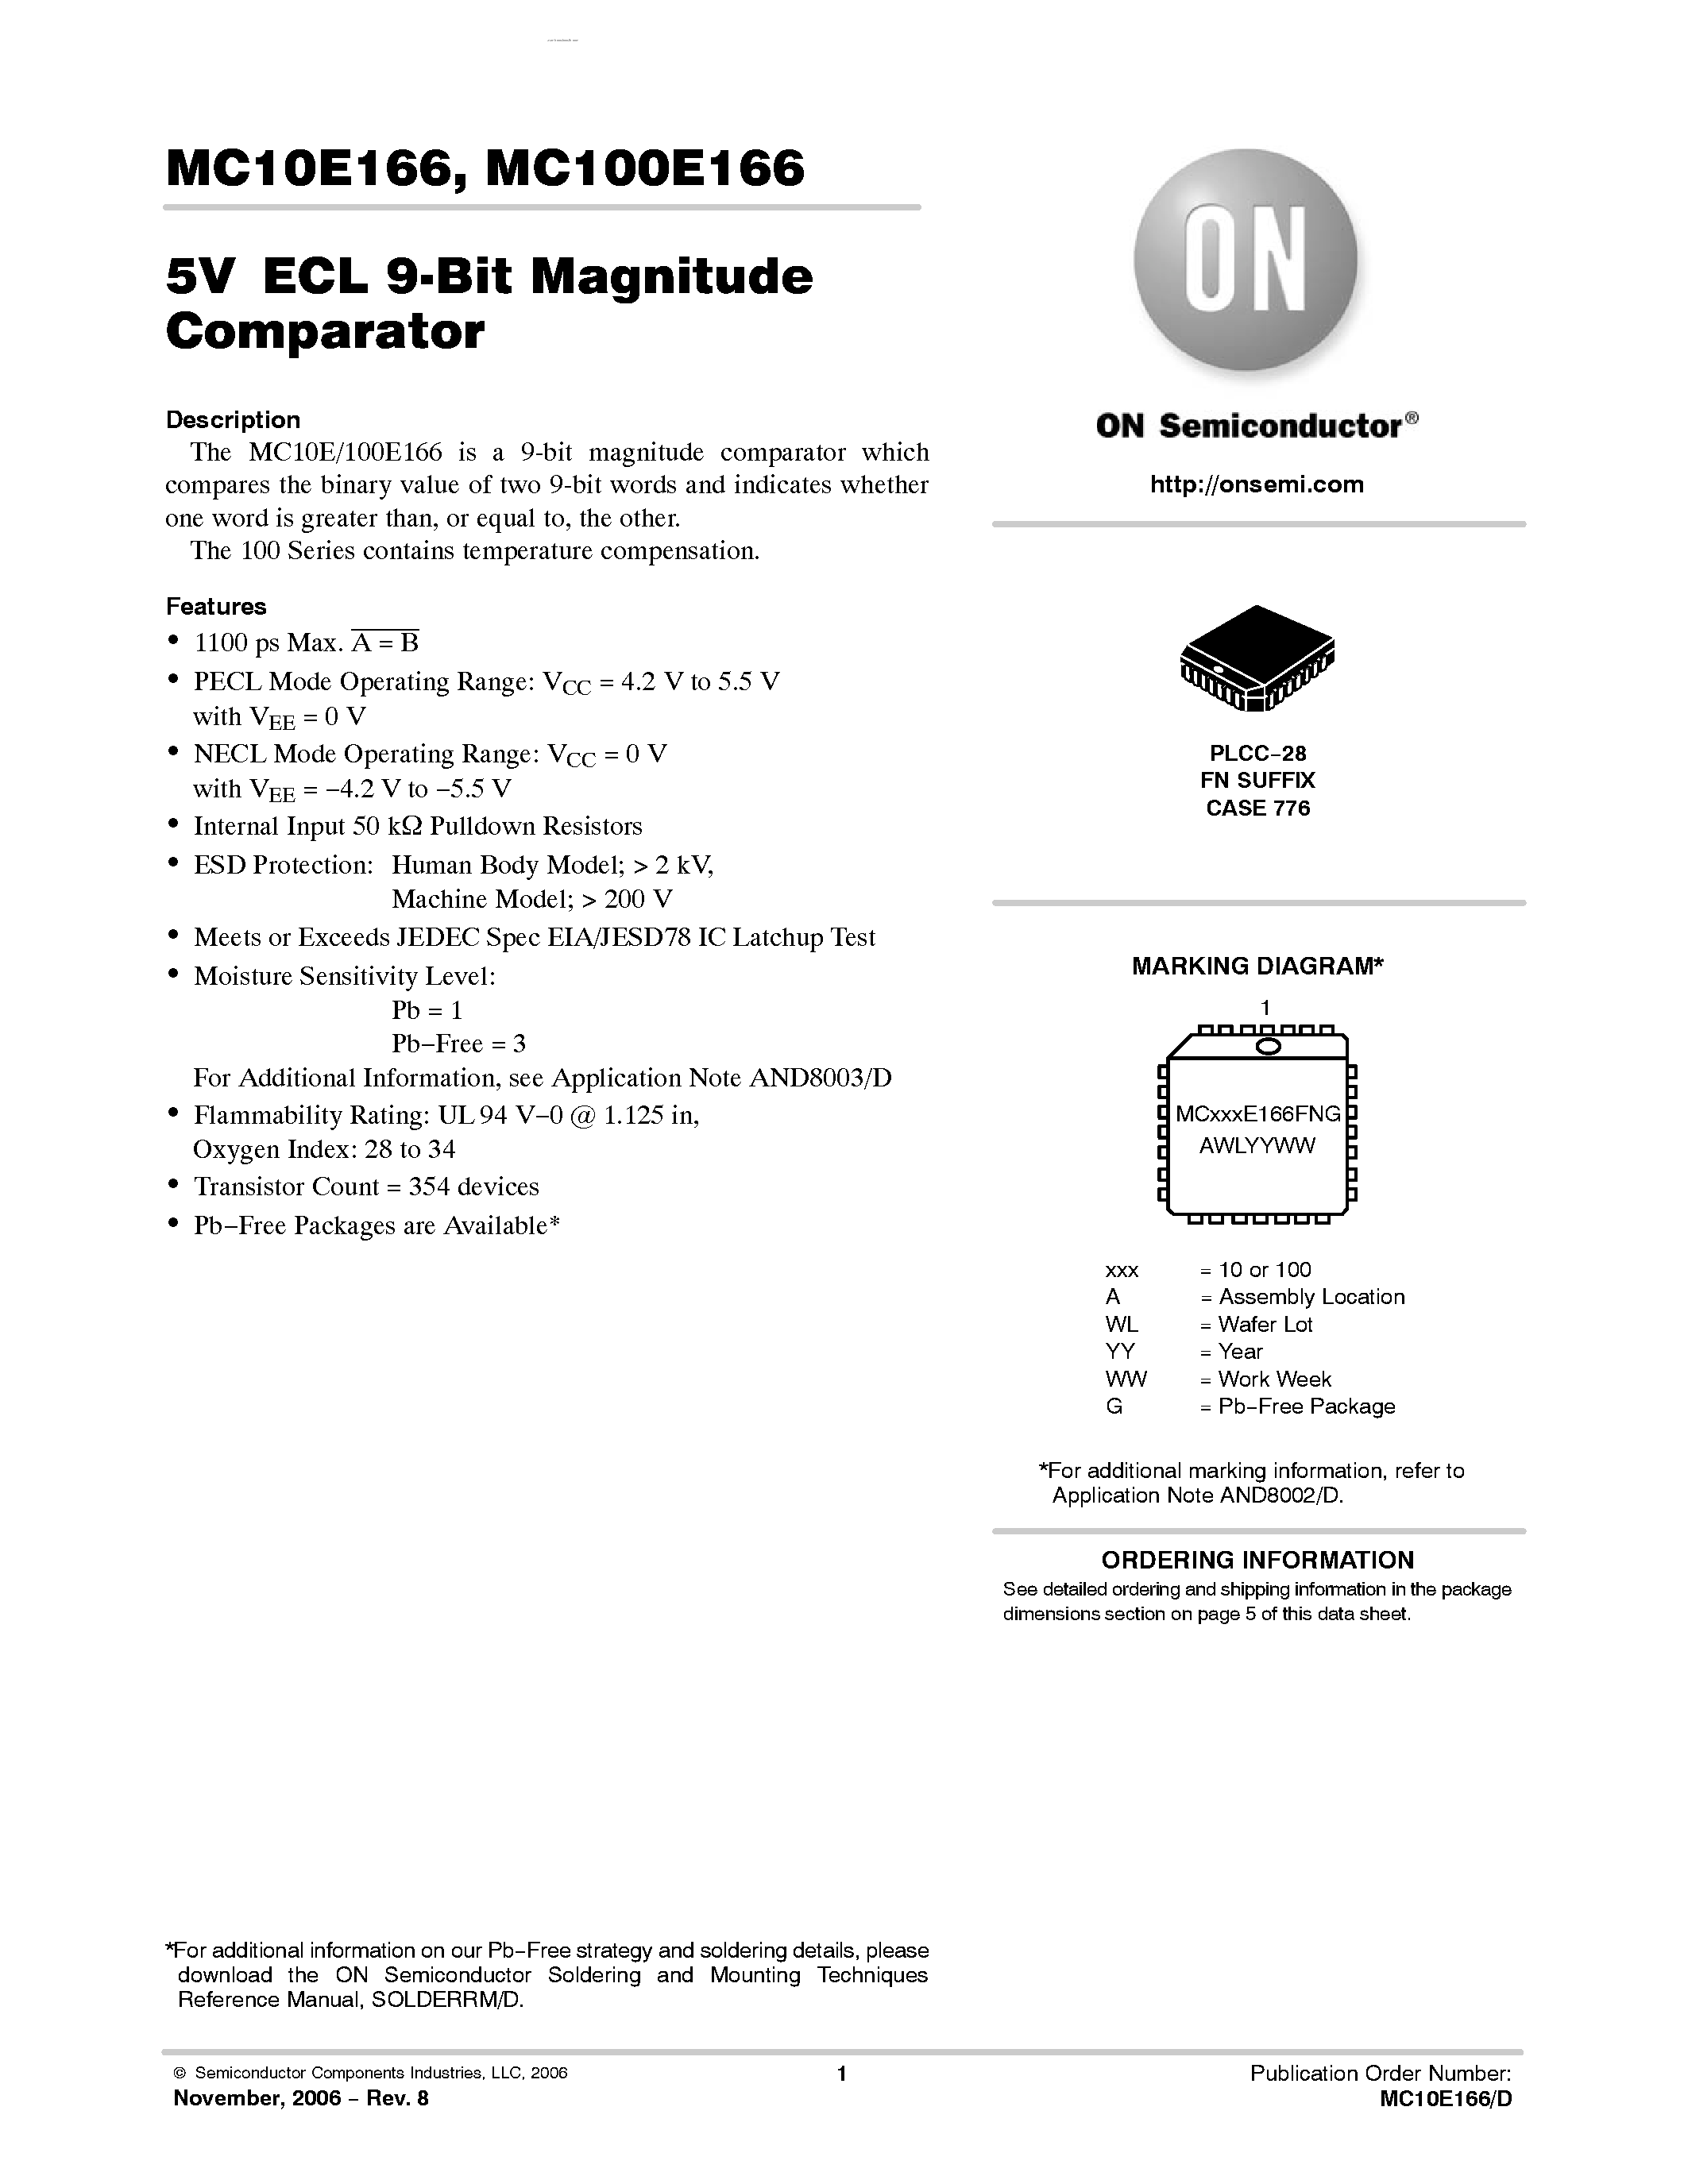 Datasheet MC100E166 - 9-BIT MAGNITUDE COMPARATOR page 1